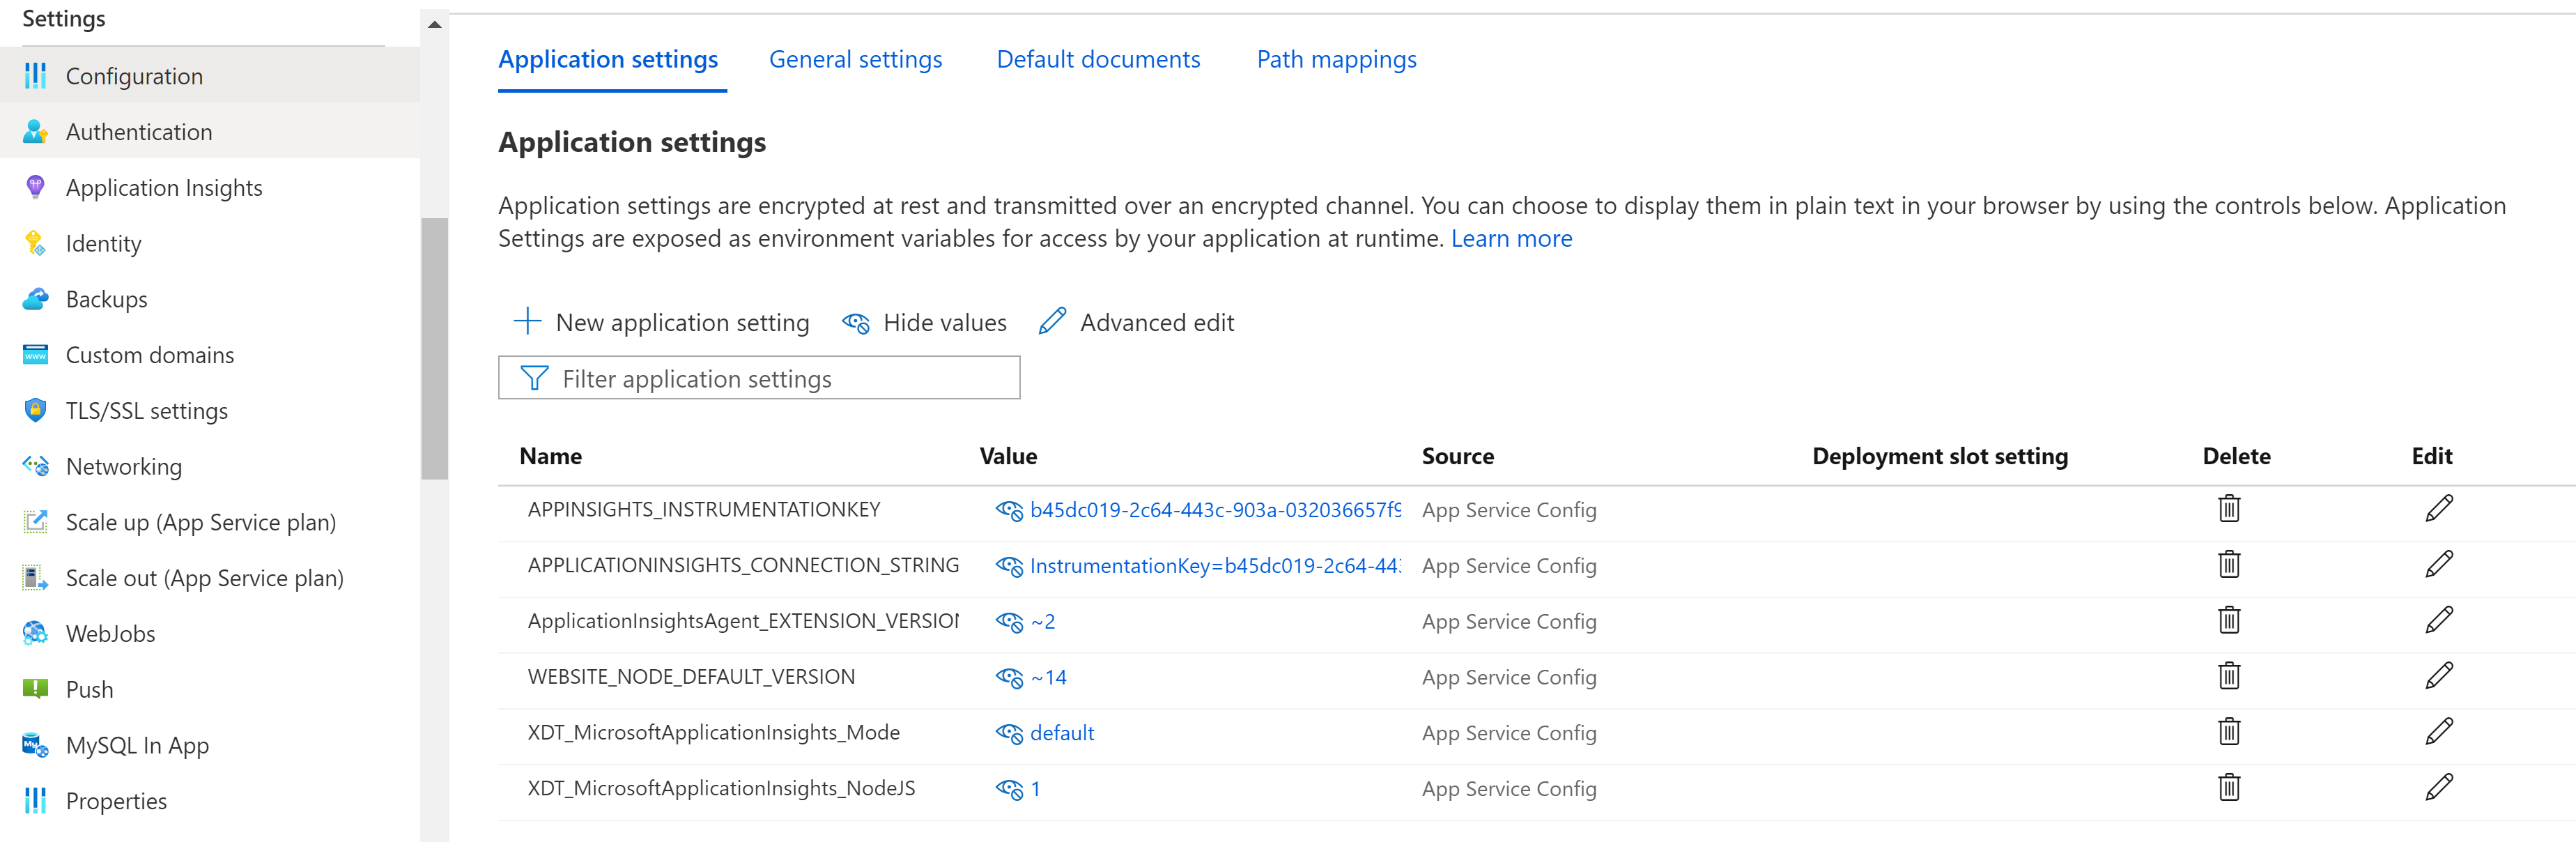 Captura de pantalla de la configuración de la aplicación de App Service con la configuración de Application Insights disponible.